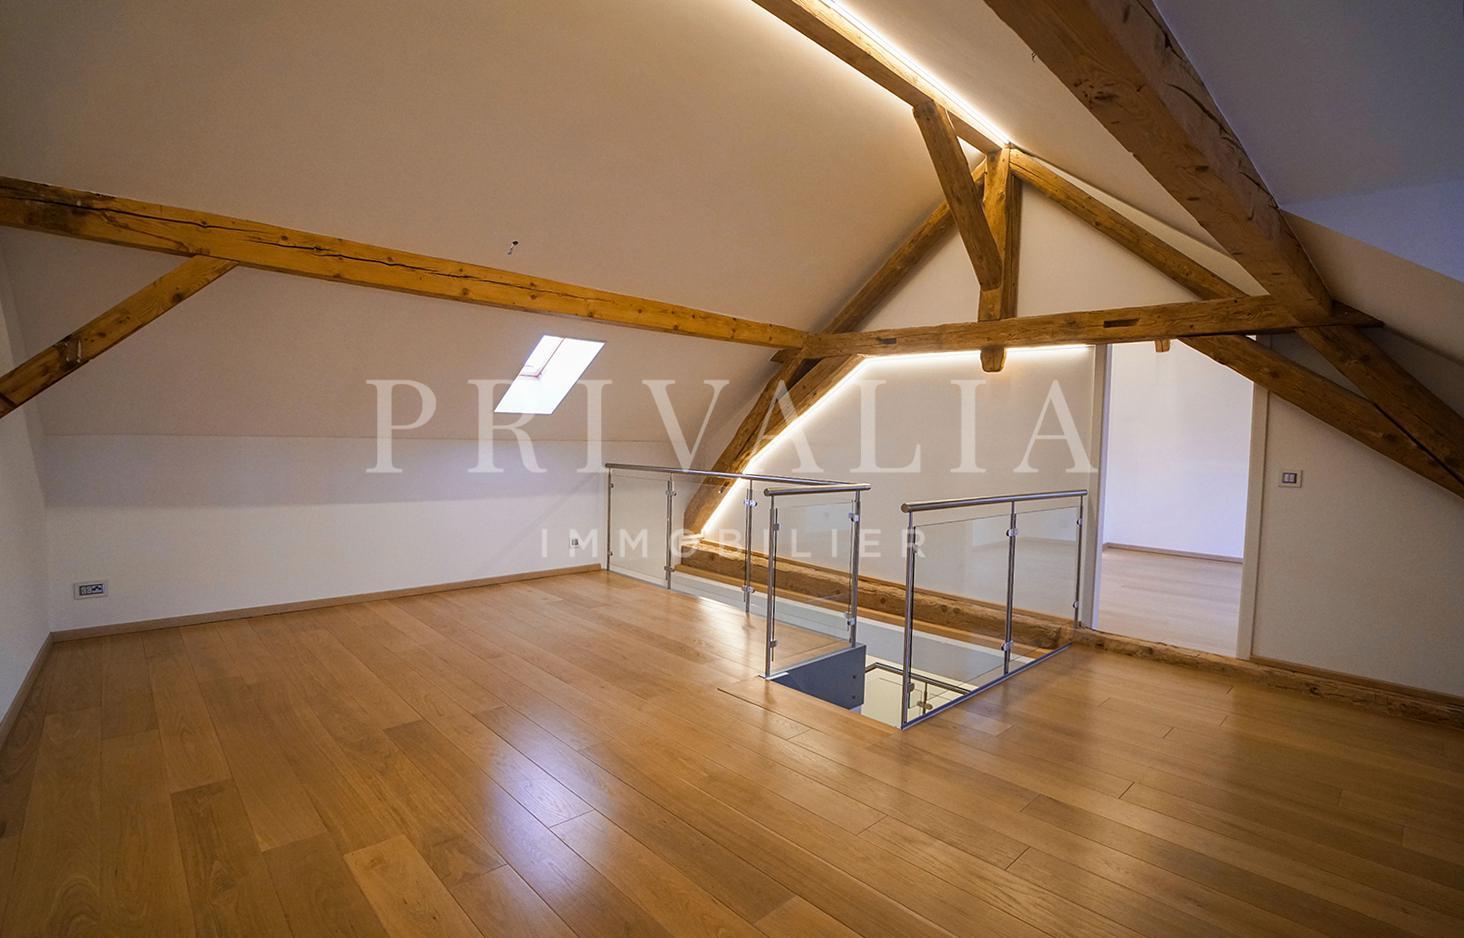 PrivaliaMagnificent contemporary 7-room triplex with terrace